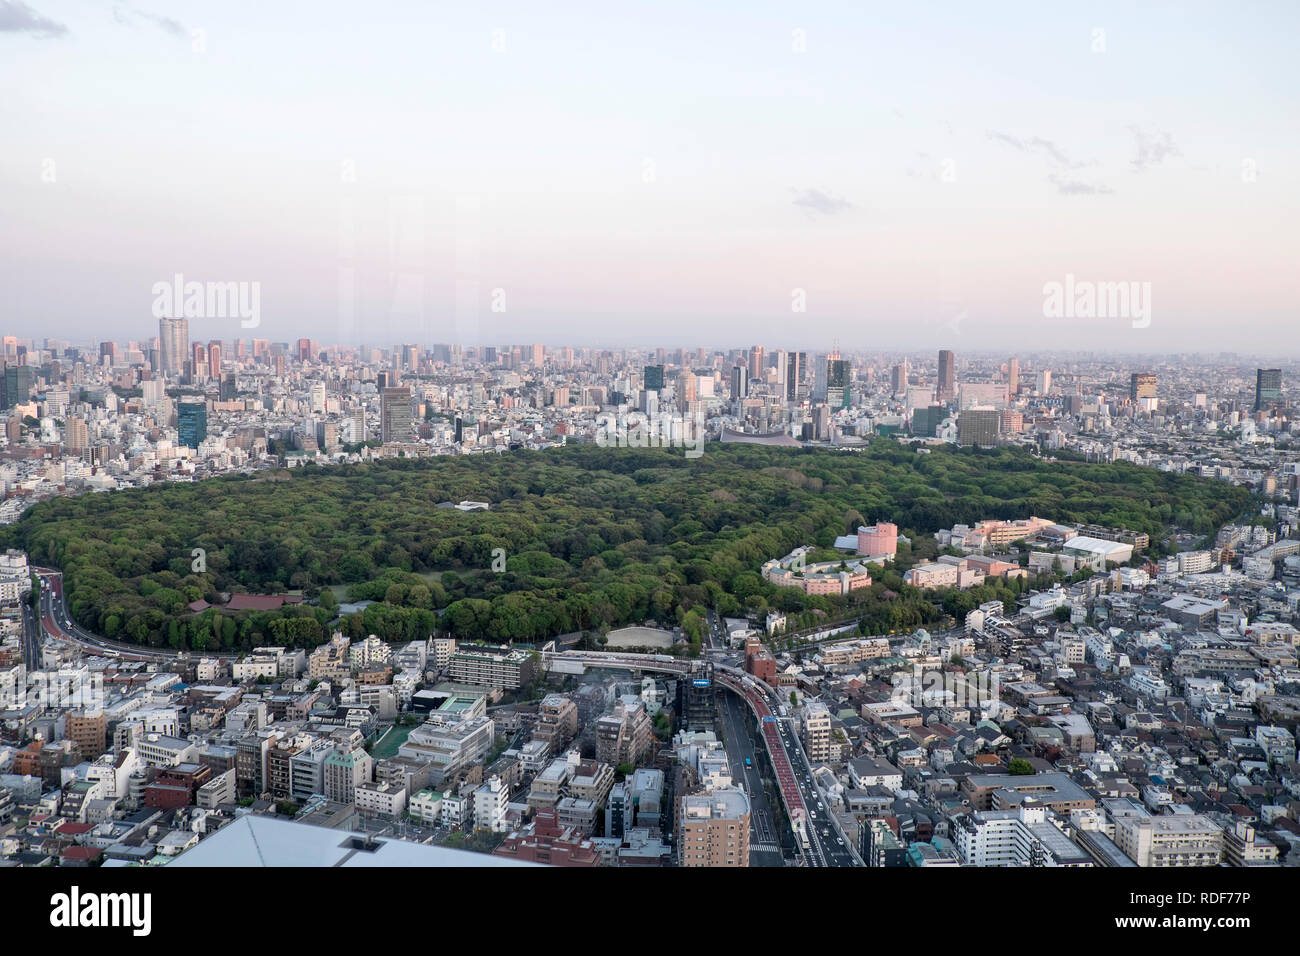 Japan, Insel Honshu, Tokio: Shinjuku Gyoen National Garten und Gebäude im Stadtteil Shinjuku *** Local Caption *** Stockfoto